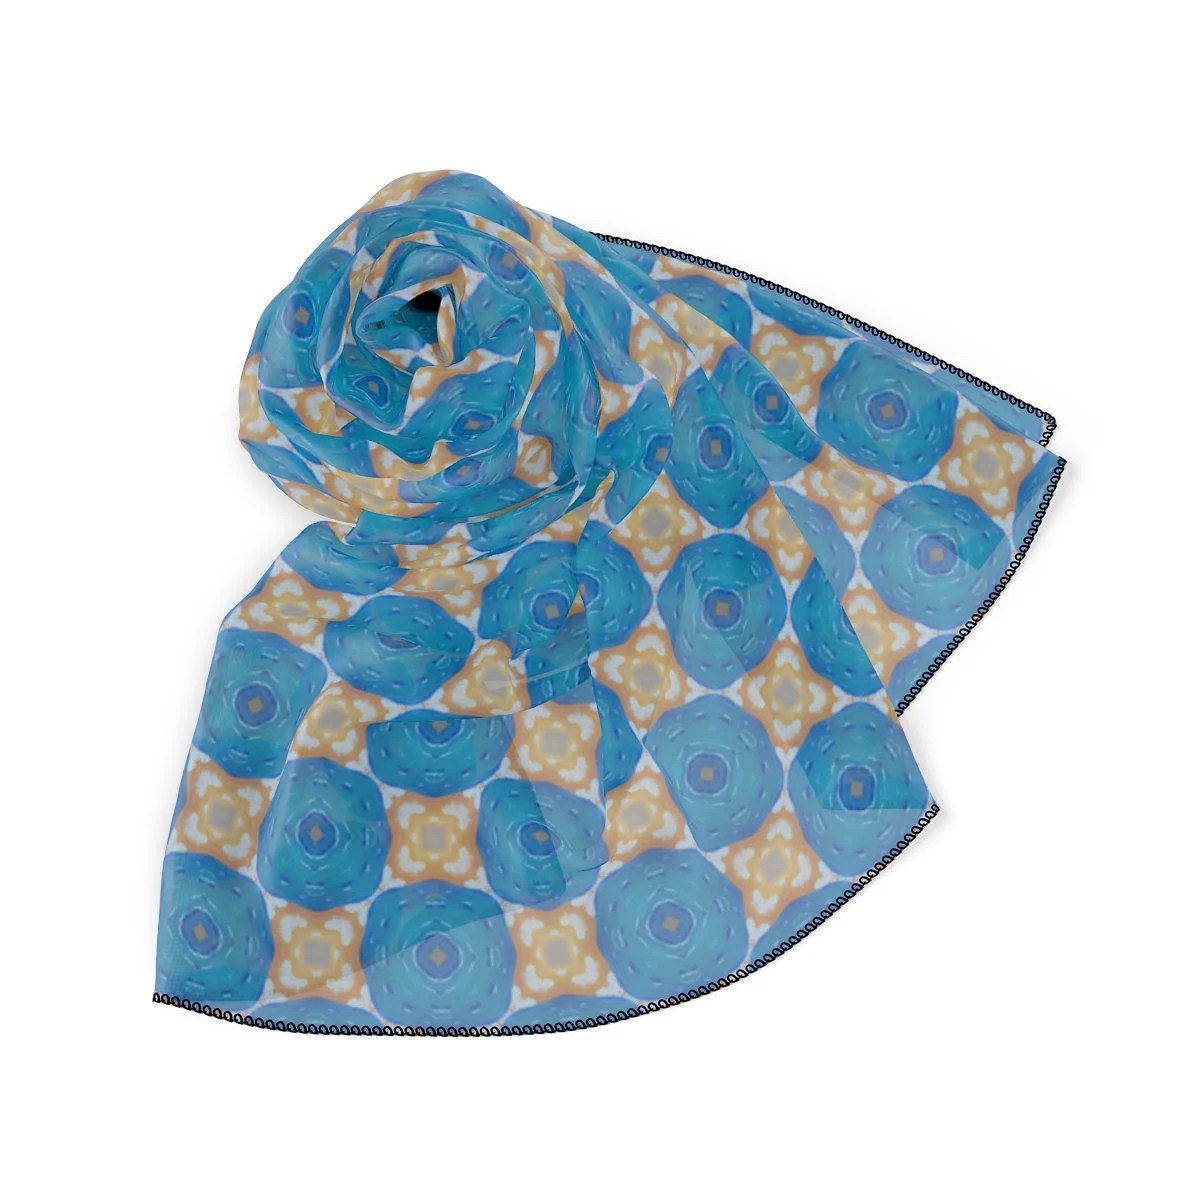 50 Inch Square Scarf Head Wrap or Tie | Silky Soft Chiffon Material |  Wear as a Shawl, Hijab or Handkerchief | True Blue Pinwheel Design